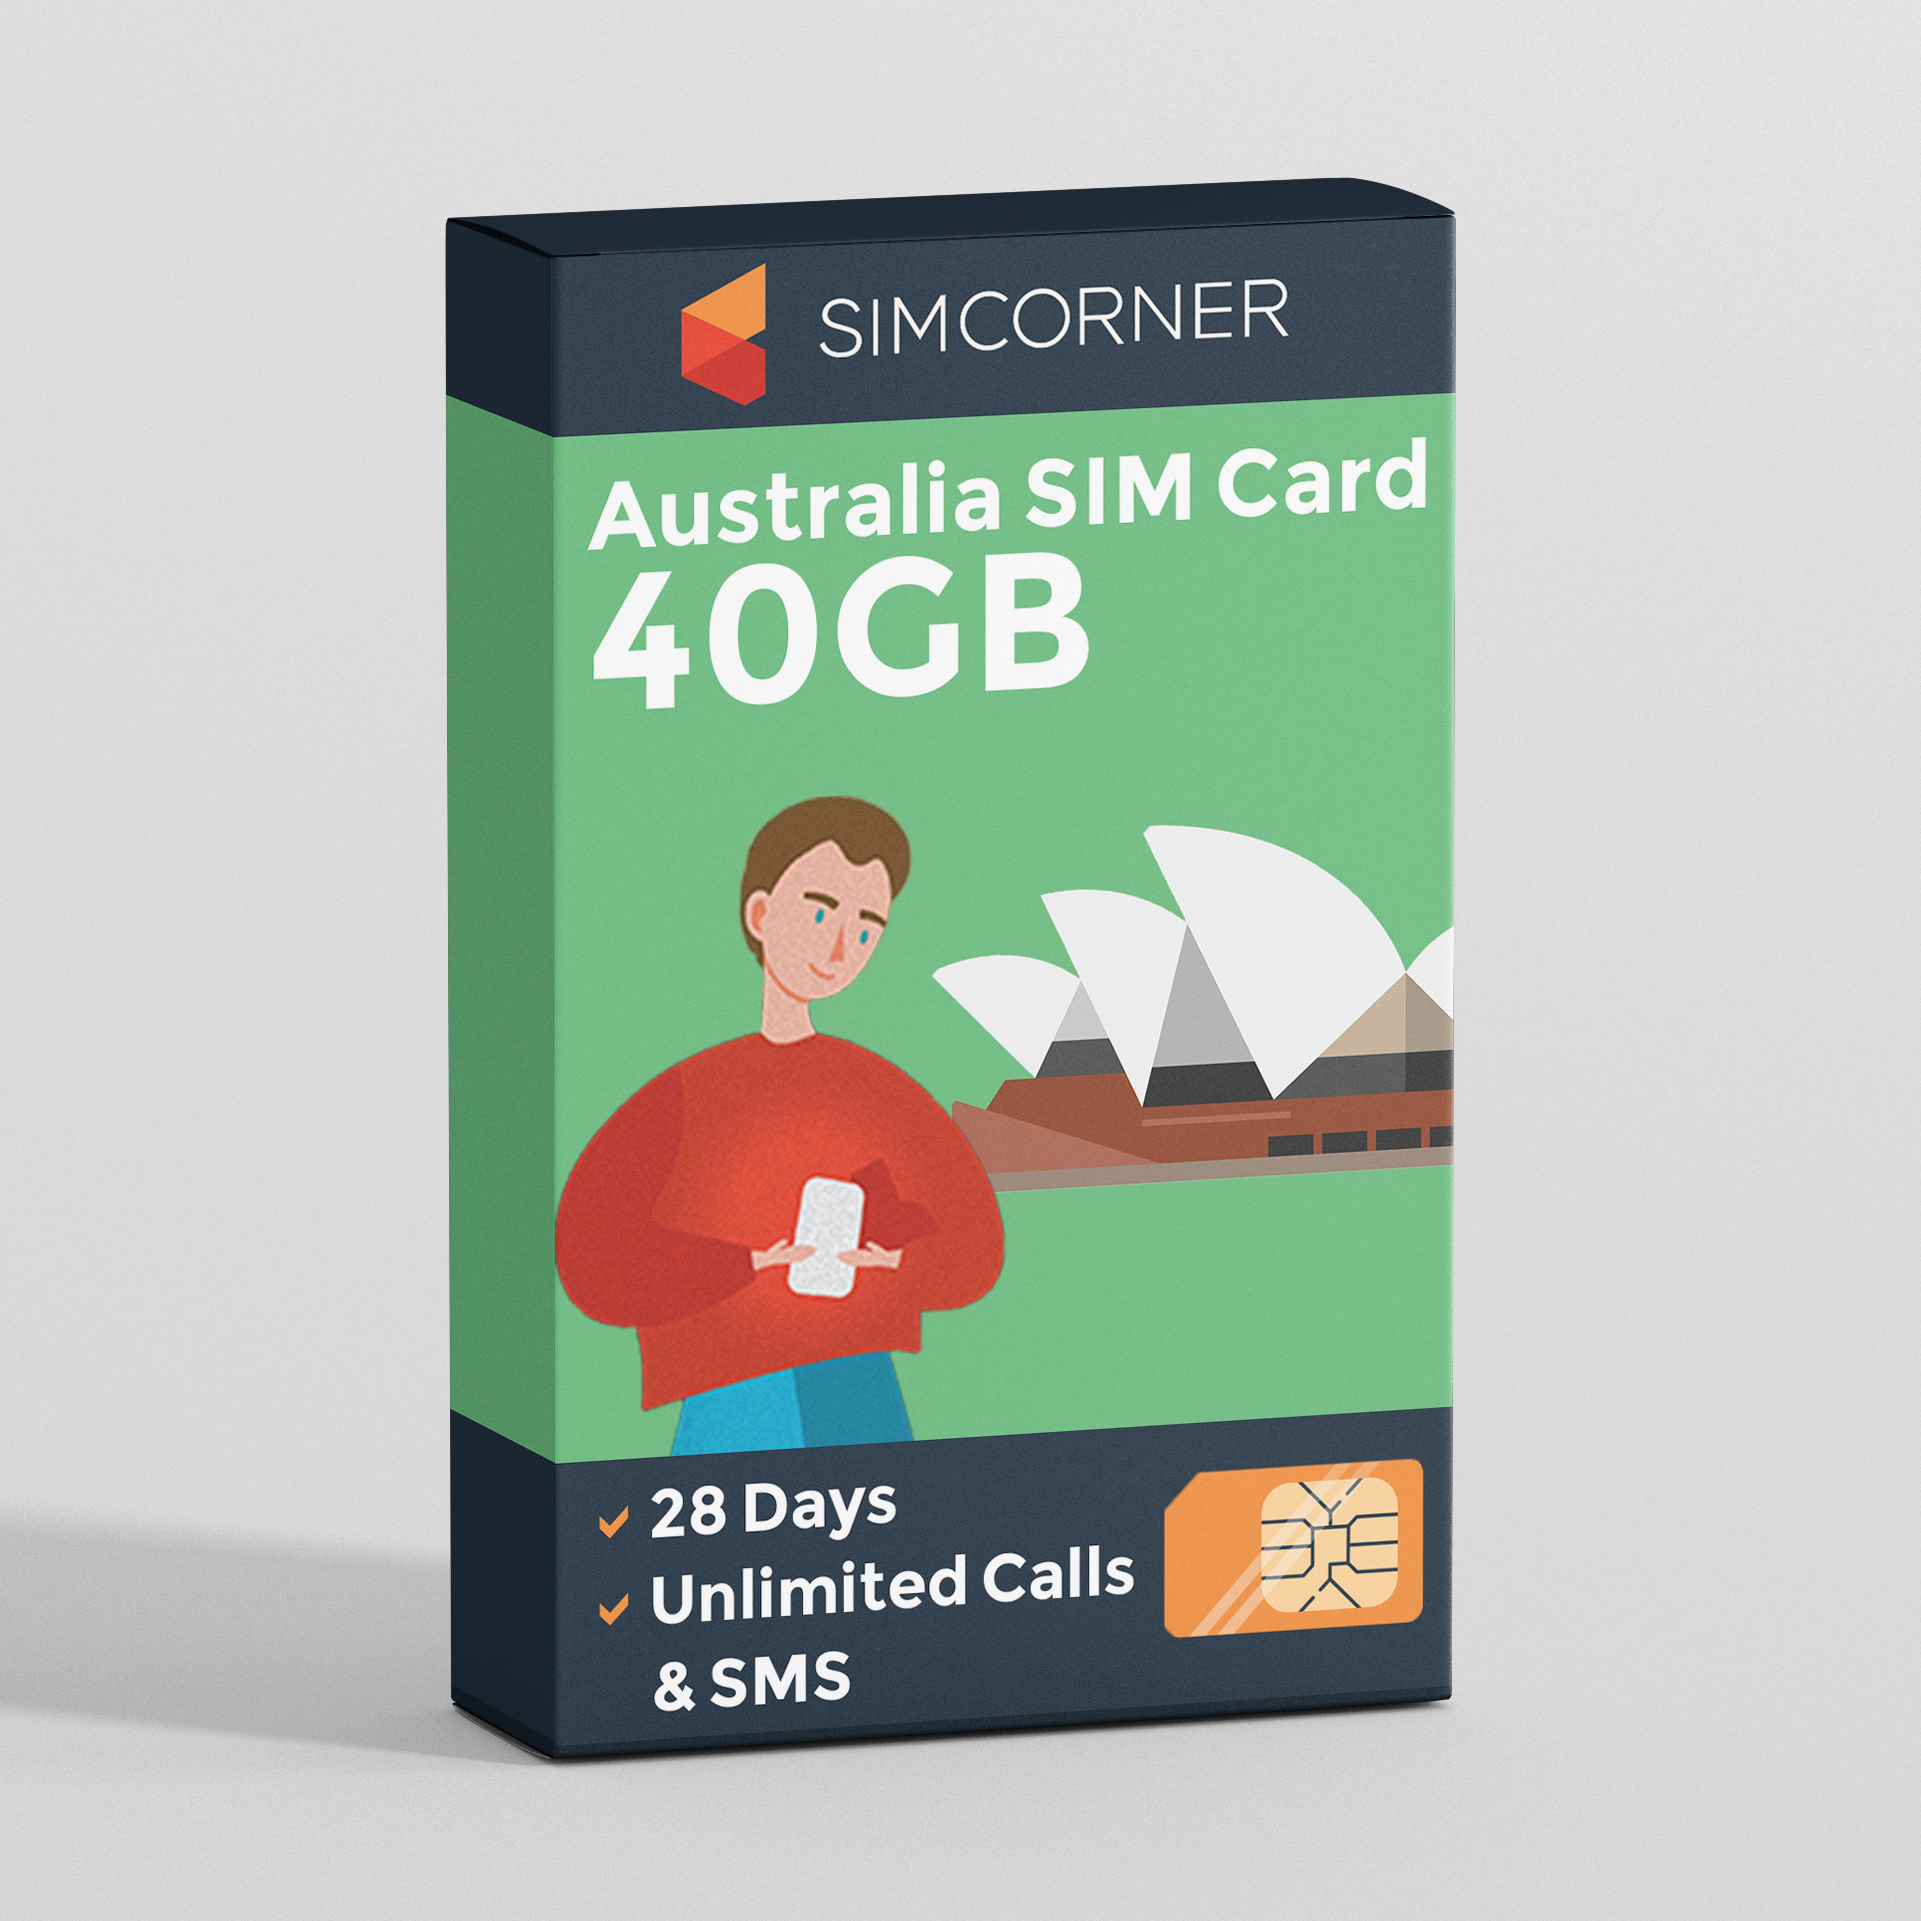 Australia SIM Card (Optus) - 40GB